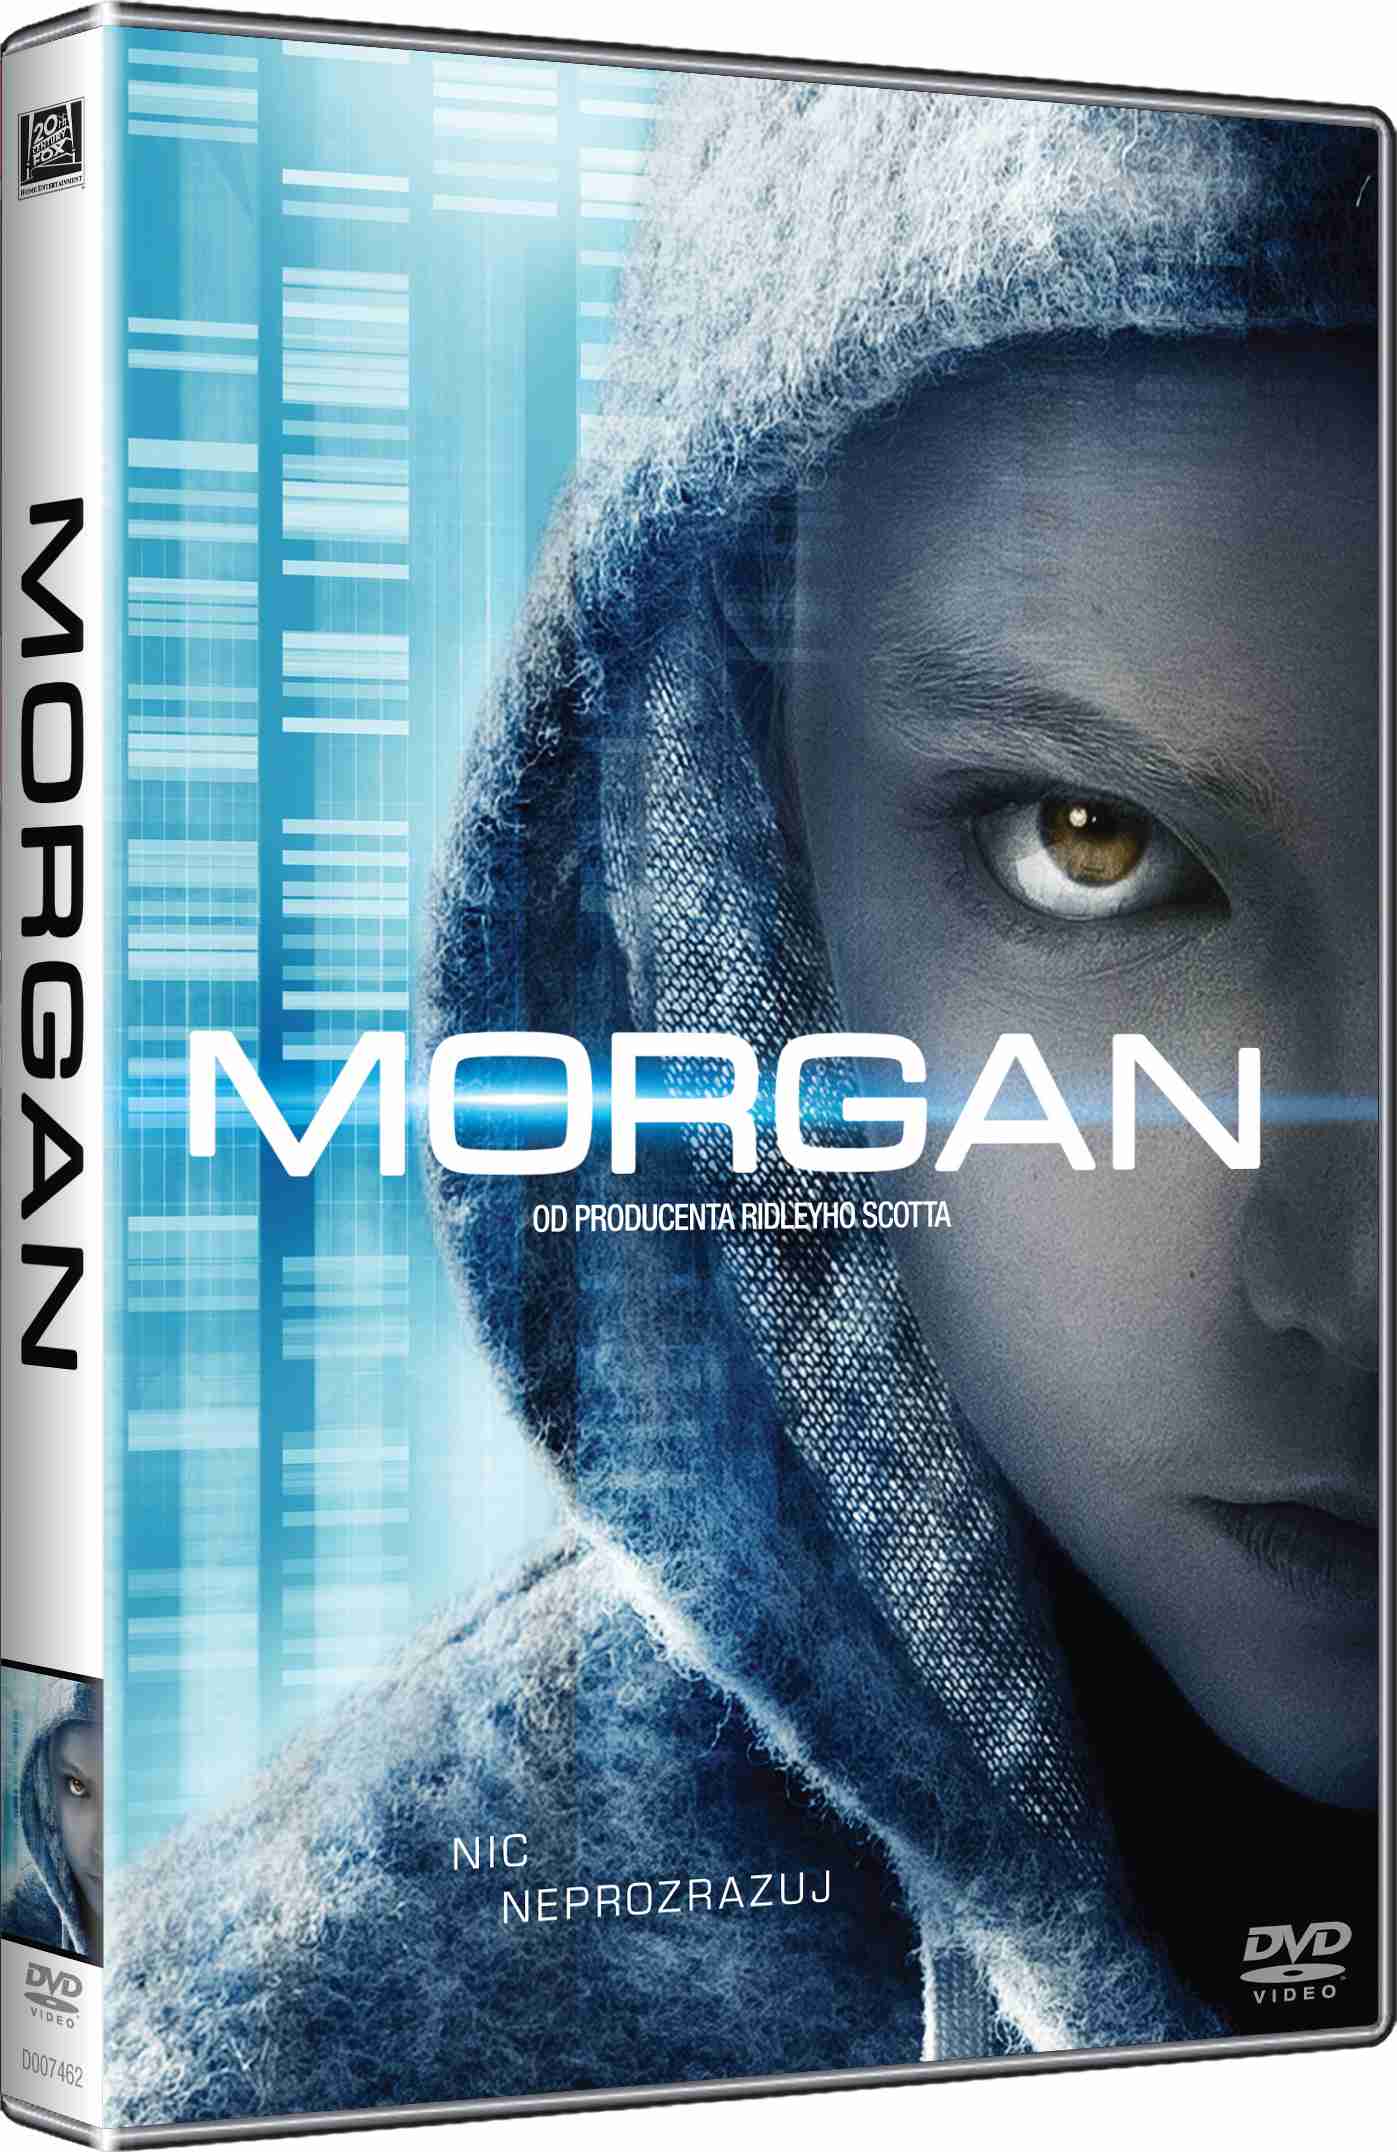 Morgan - DVD